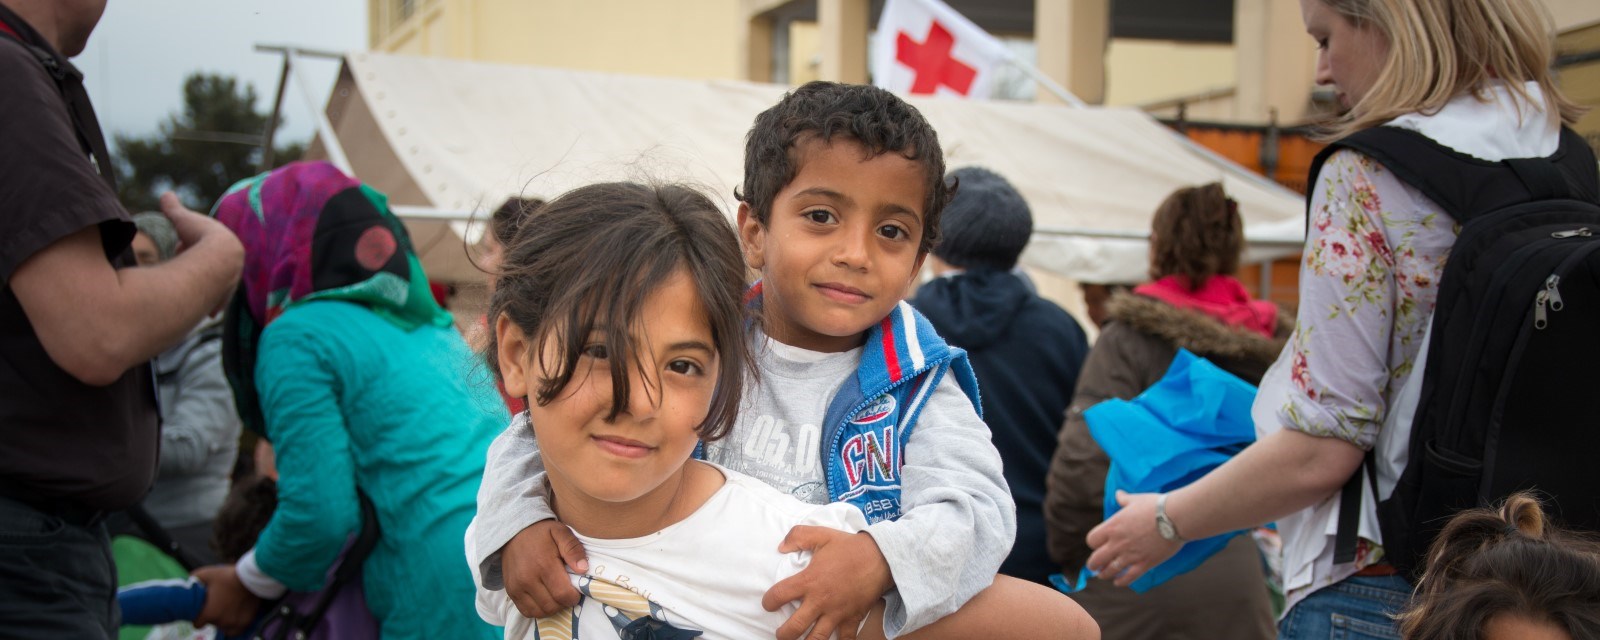 En ung jente bærer en enda yngre gutt på ryggen i Diavata Camp, en flyktningleir i Hellas. Foto: Thomas Andre Syvertsen/Norges Røde Kors